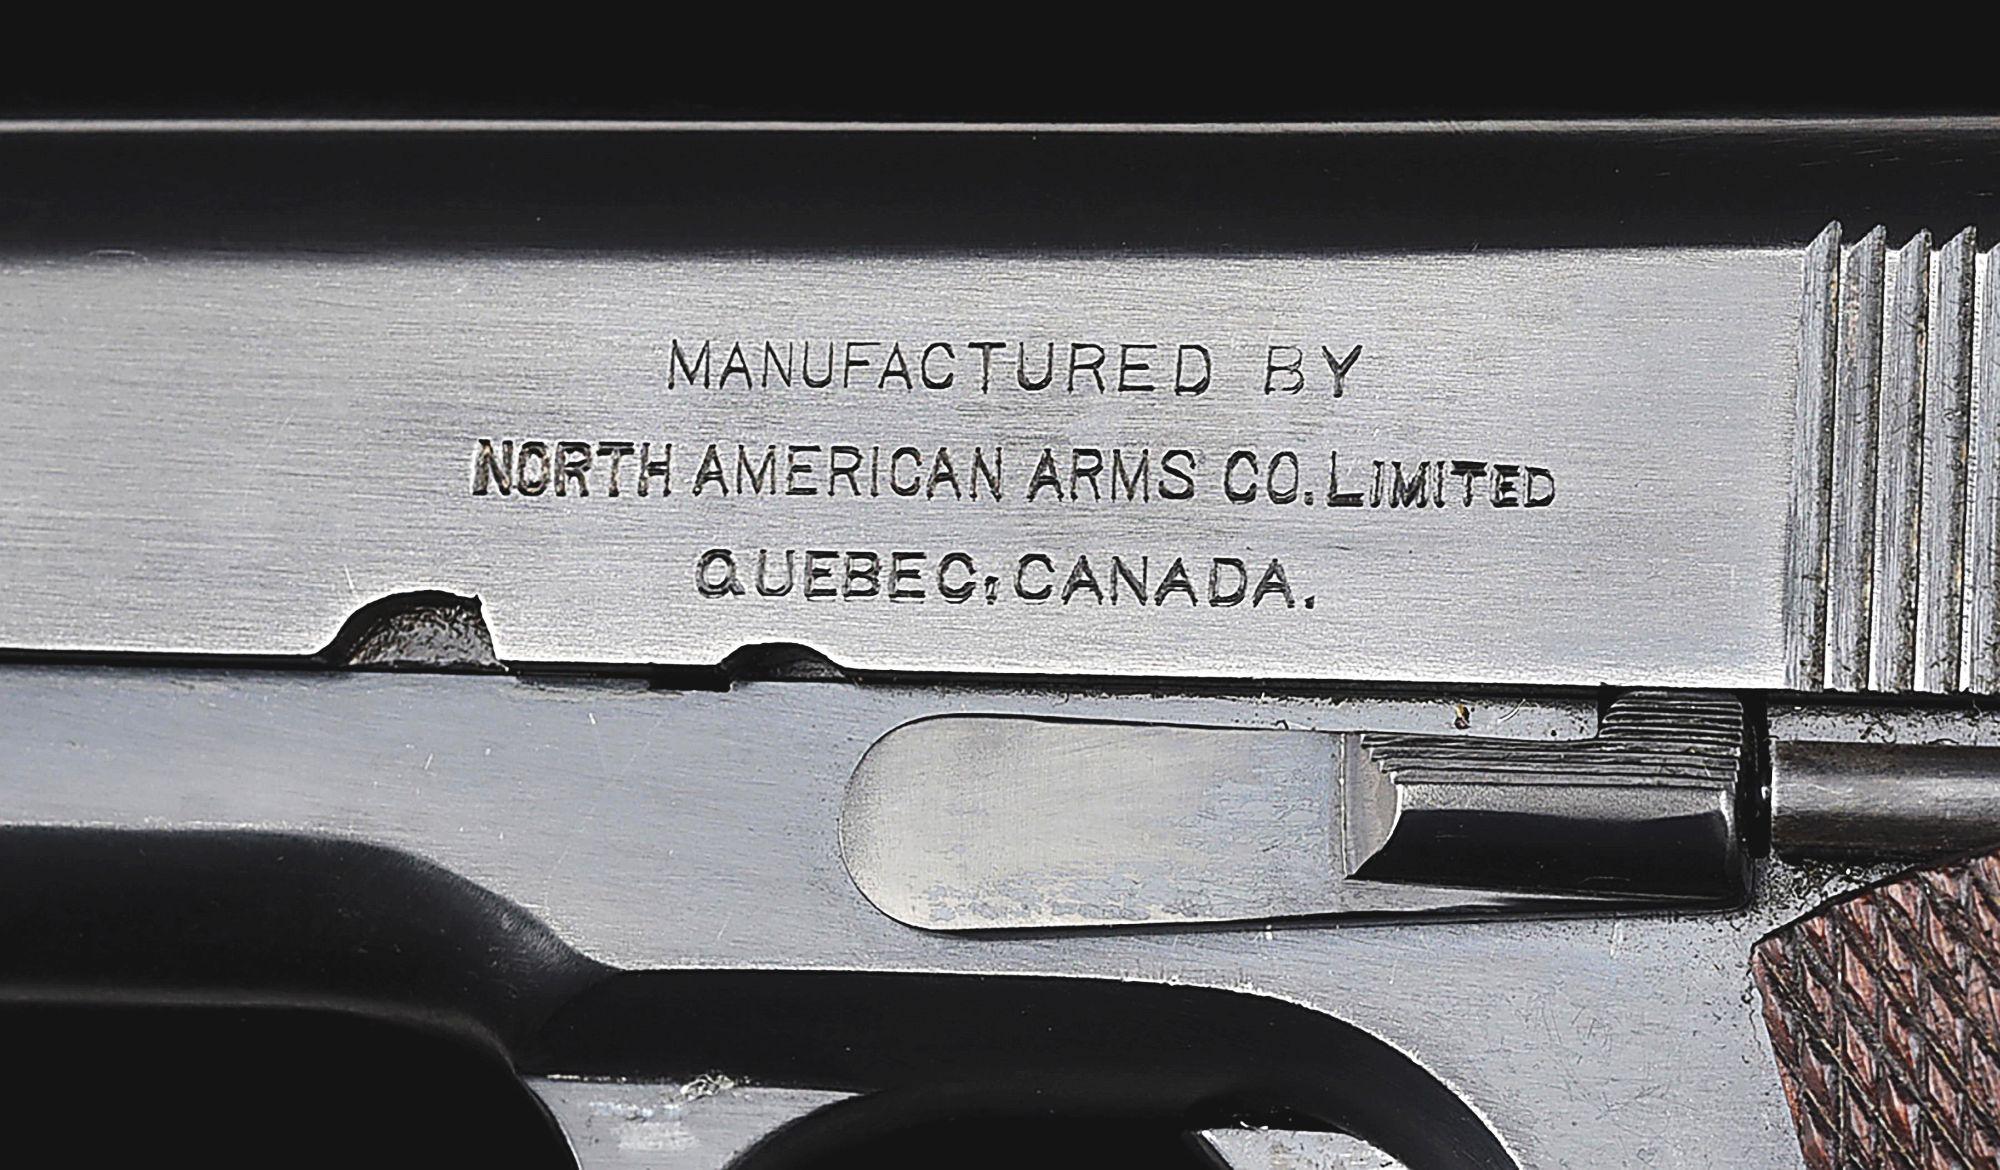 (C) A VERY SCARCE NORTH AMERICAN ARMS 1911 .45 ACP SEMI-AUTOMATIC PISTOL.